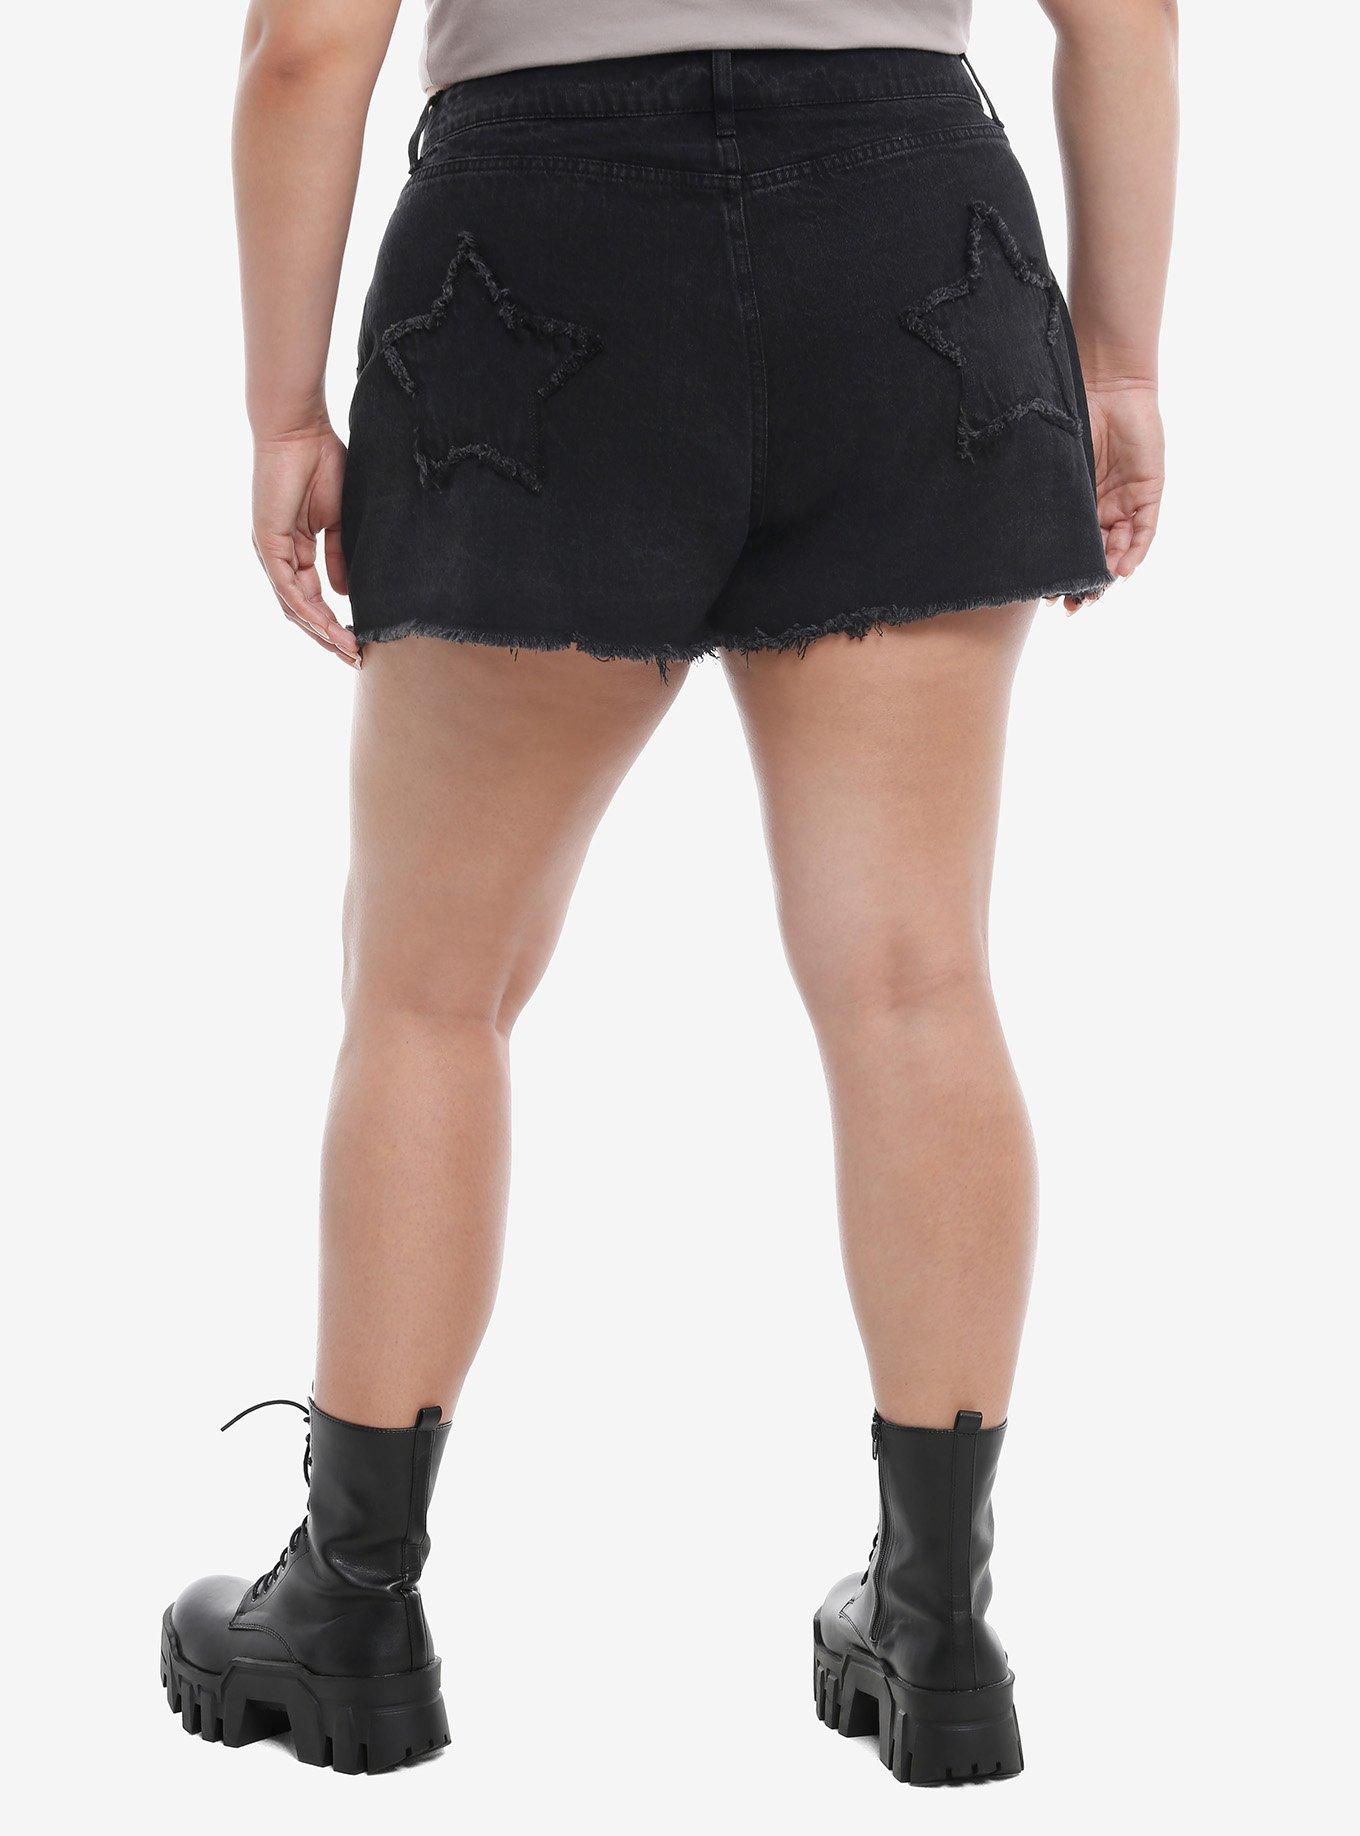 Social Collision Black Star Patch Girls Denim Shorts Plus Size, DARK BLUE, alternate